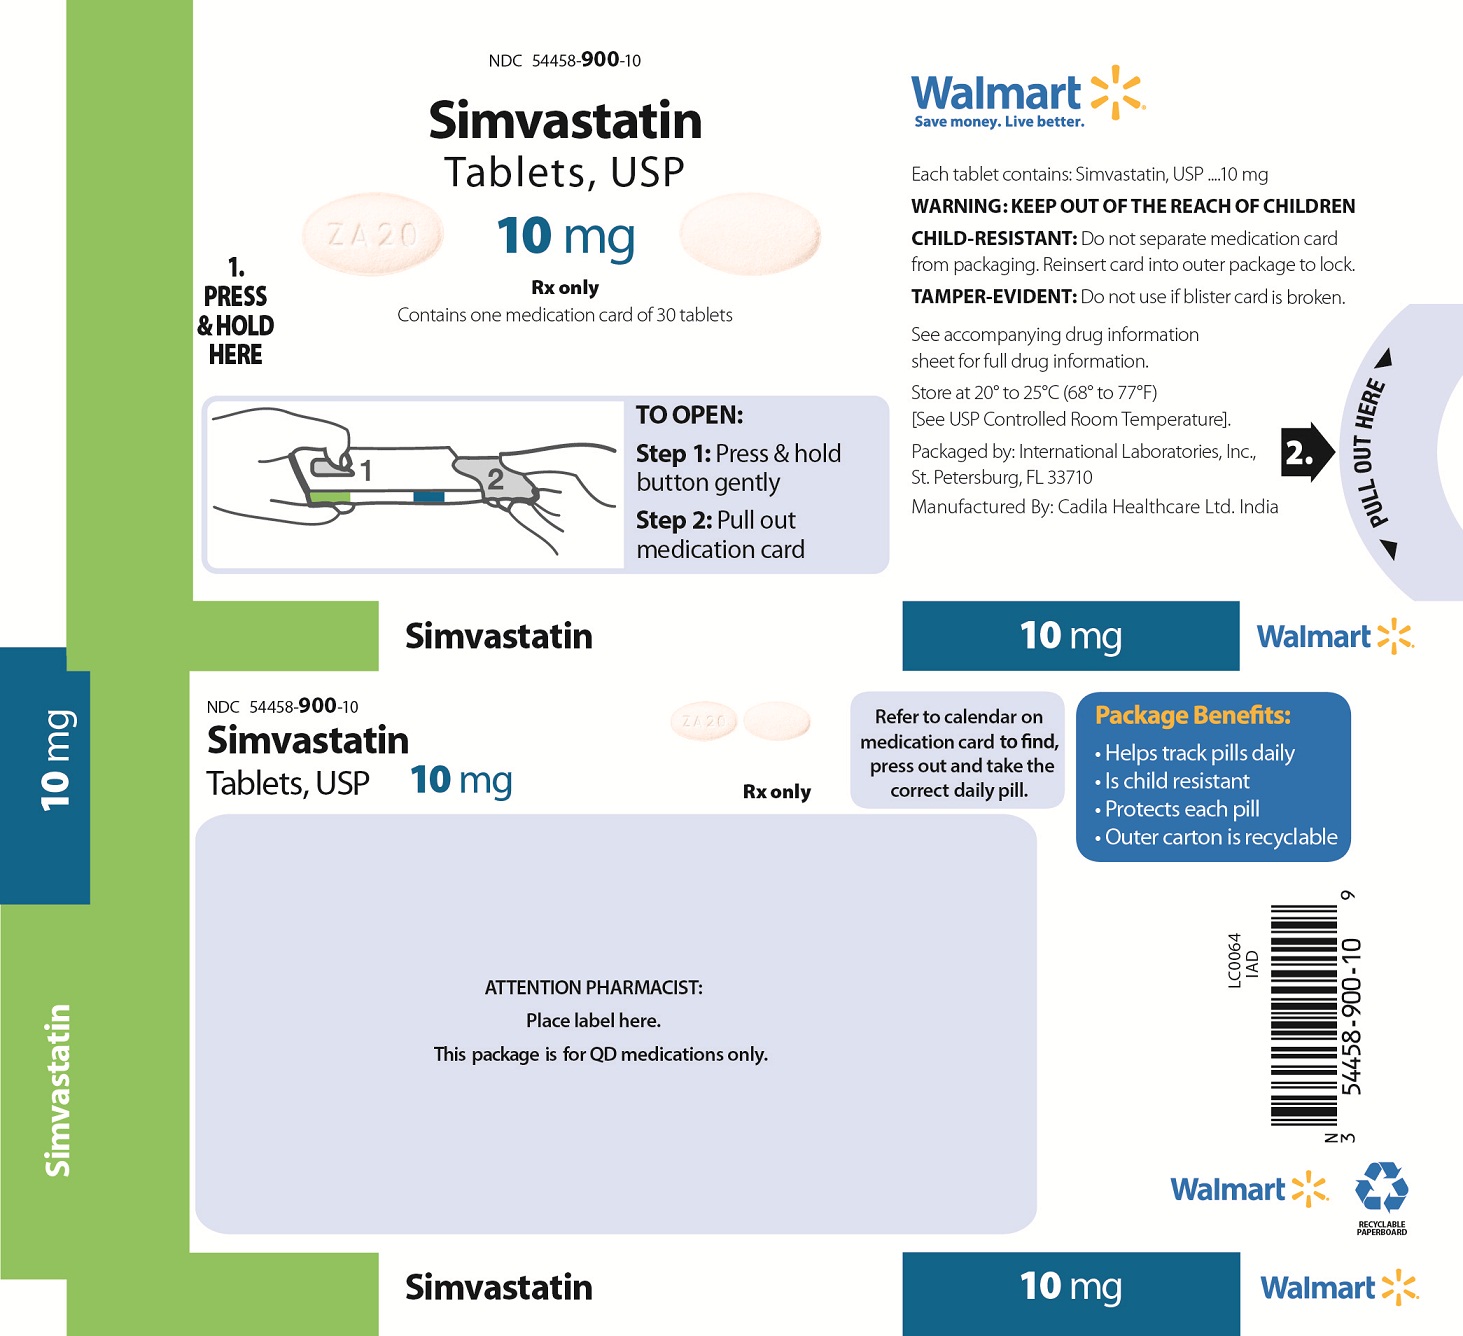 Simvastatin Tablets, USP 10 mg